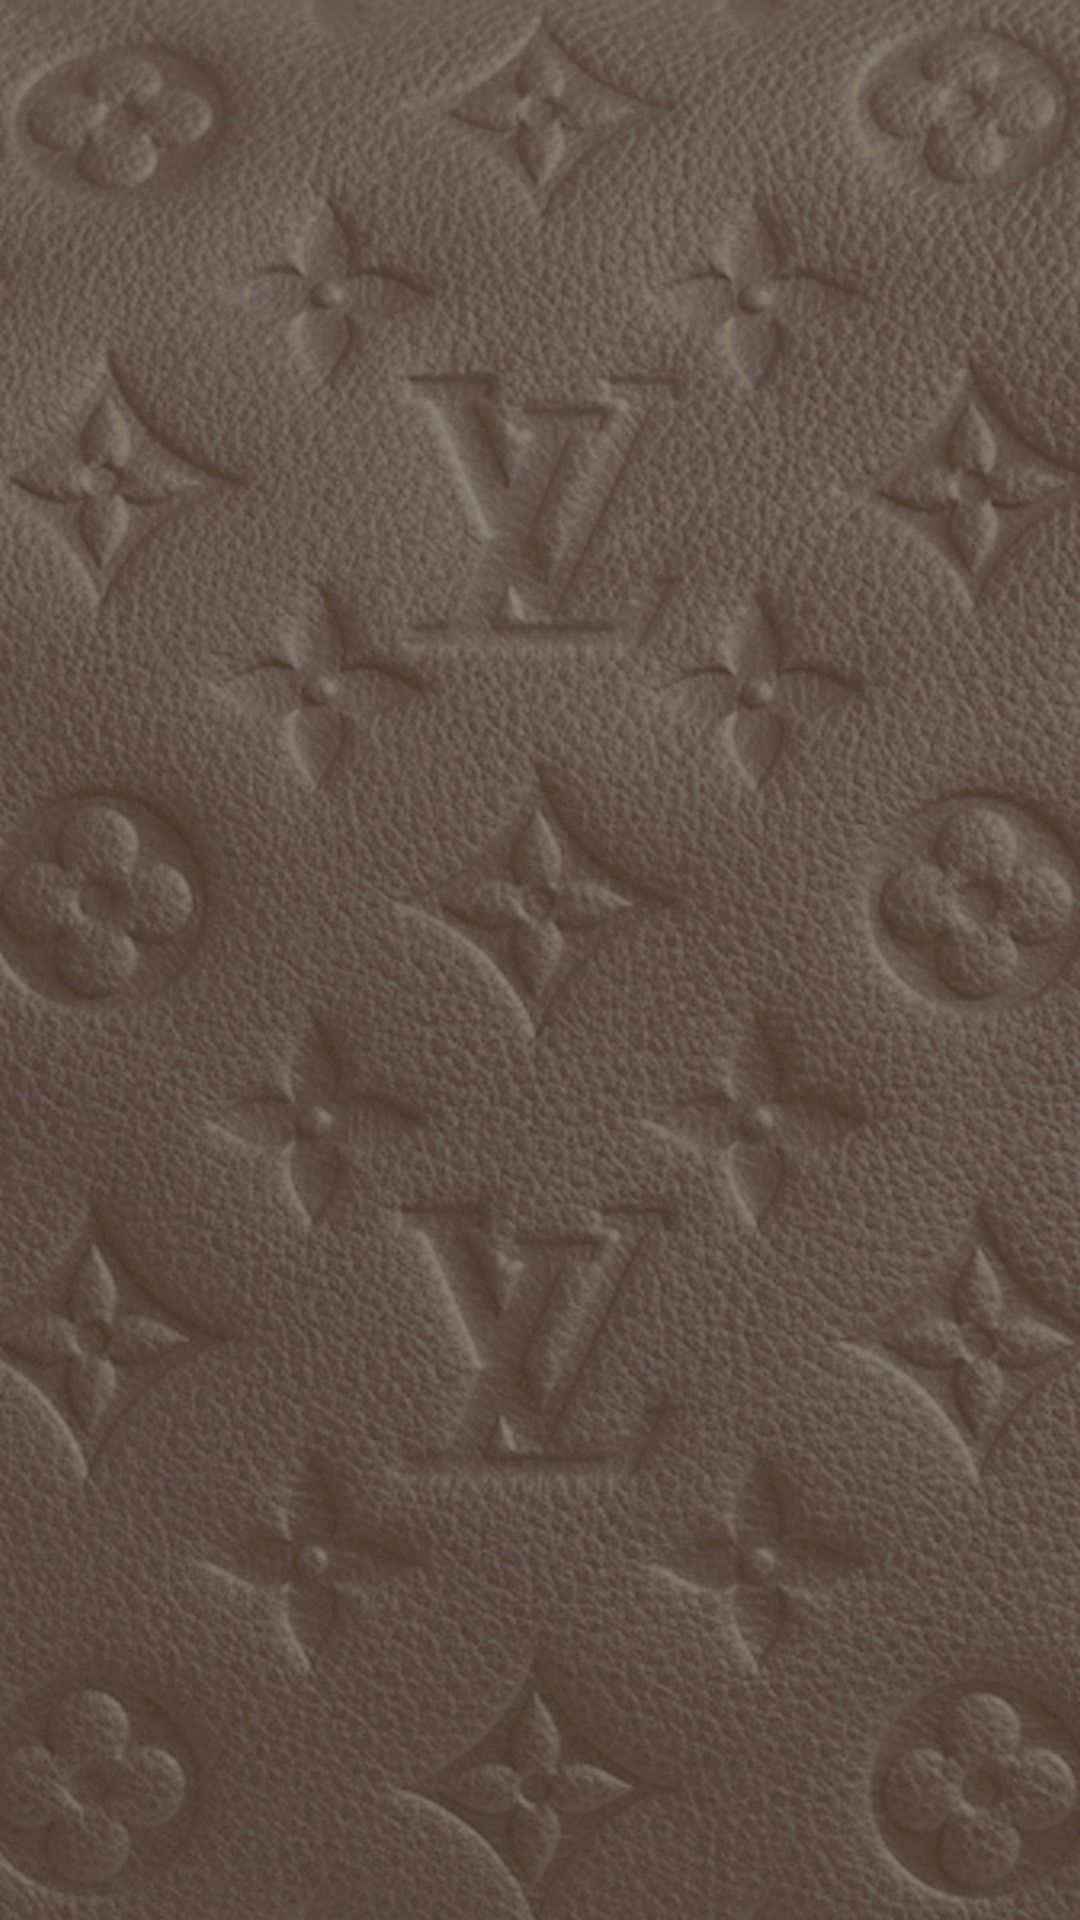 Wallpapers Louis Vuitton Iphone - Wallpaper Cave